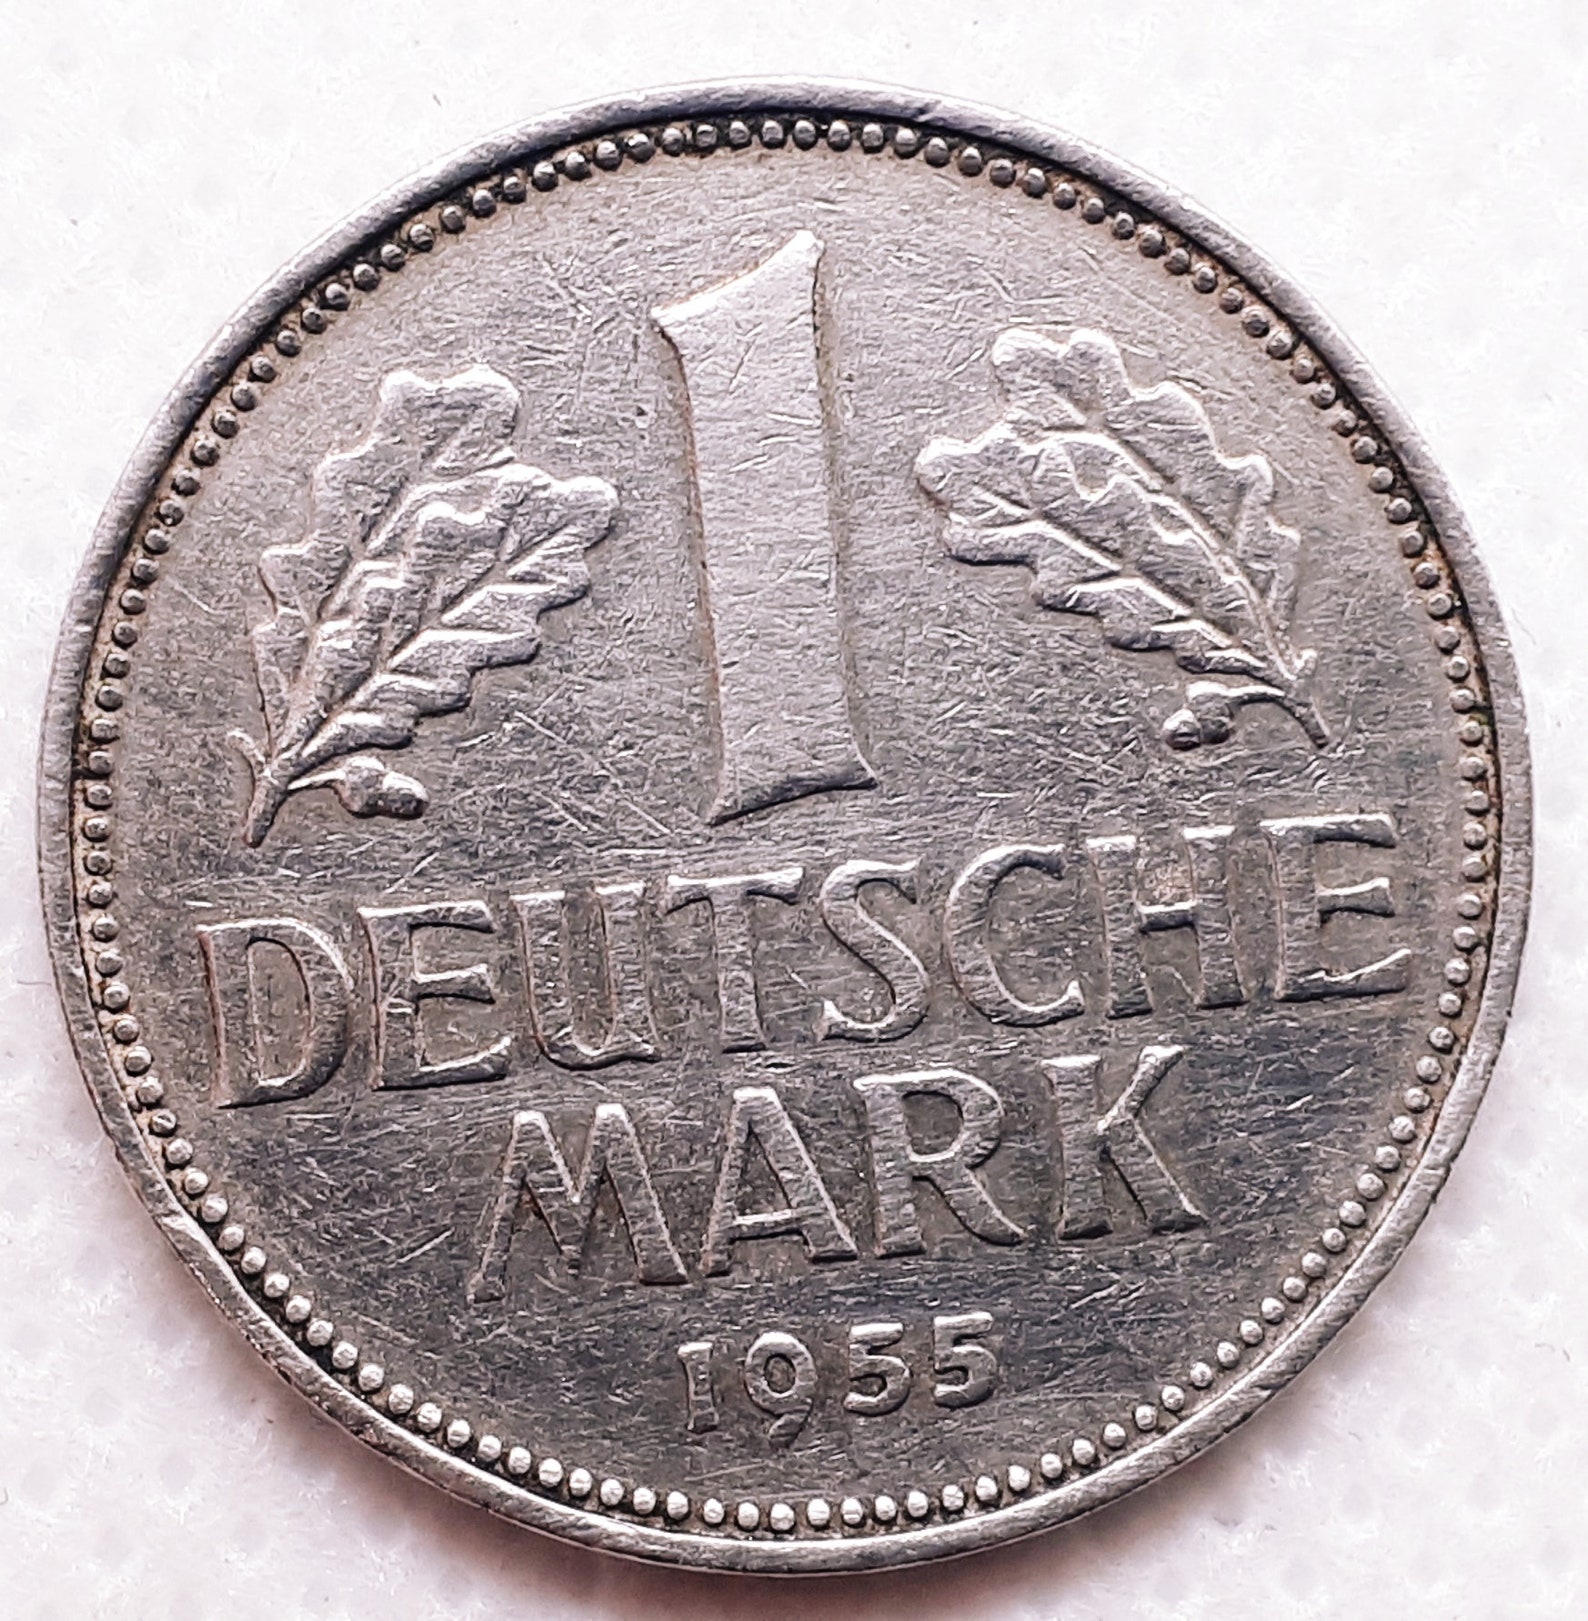 Deutsche mark. Немецкая марка. Немецкие монеты. Дойч марка. Монета немецкая марка Старая.